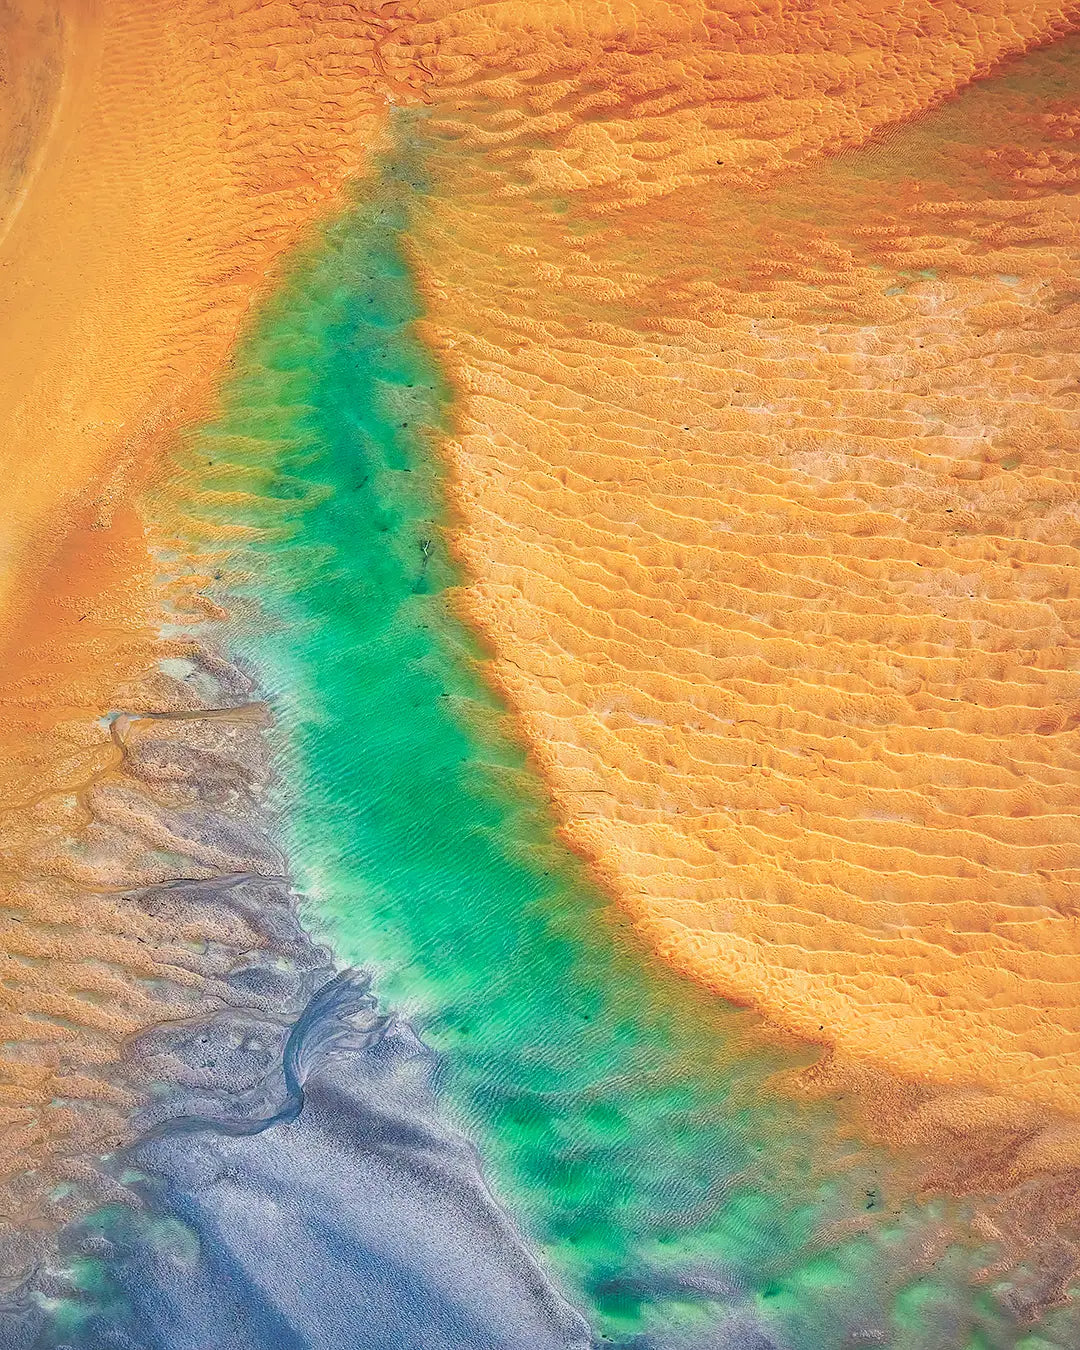 Opal Illusion - Tidal patterns, Roebuck Bay, The Kimberley, Western Australia